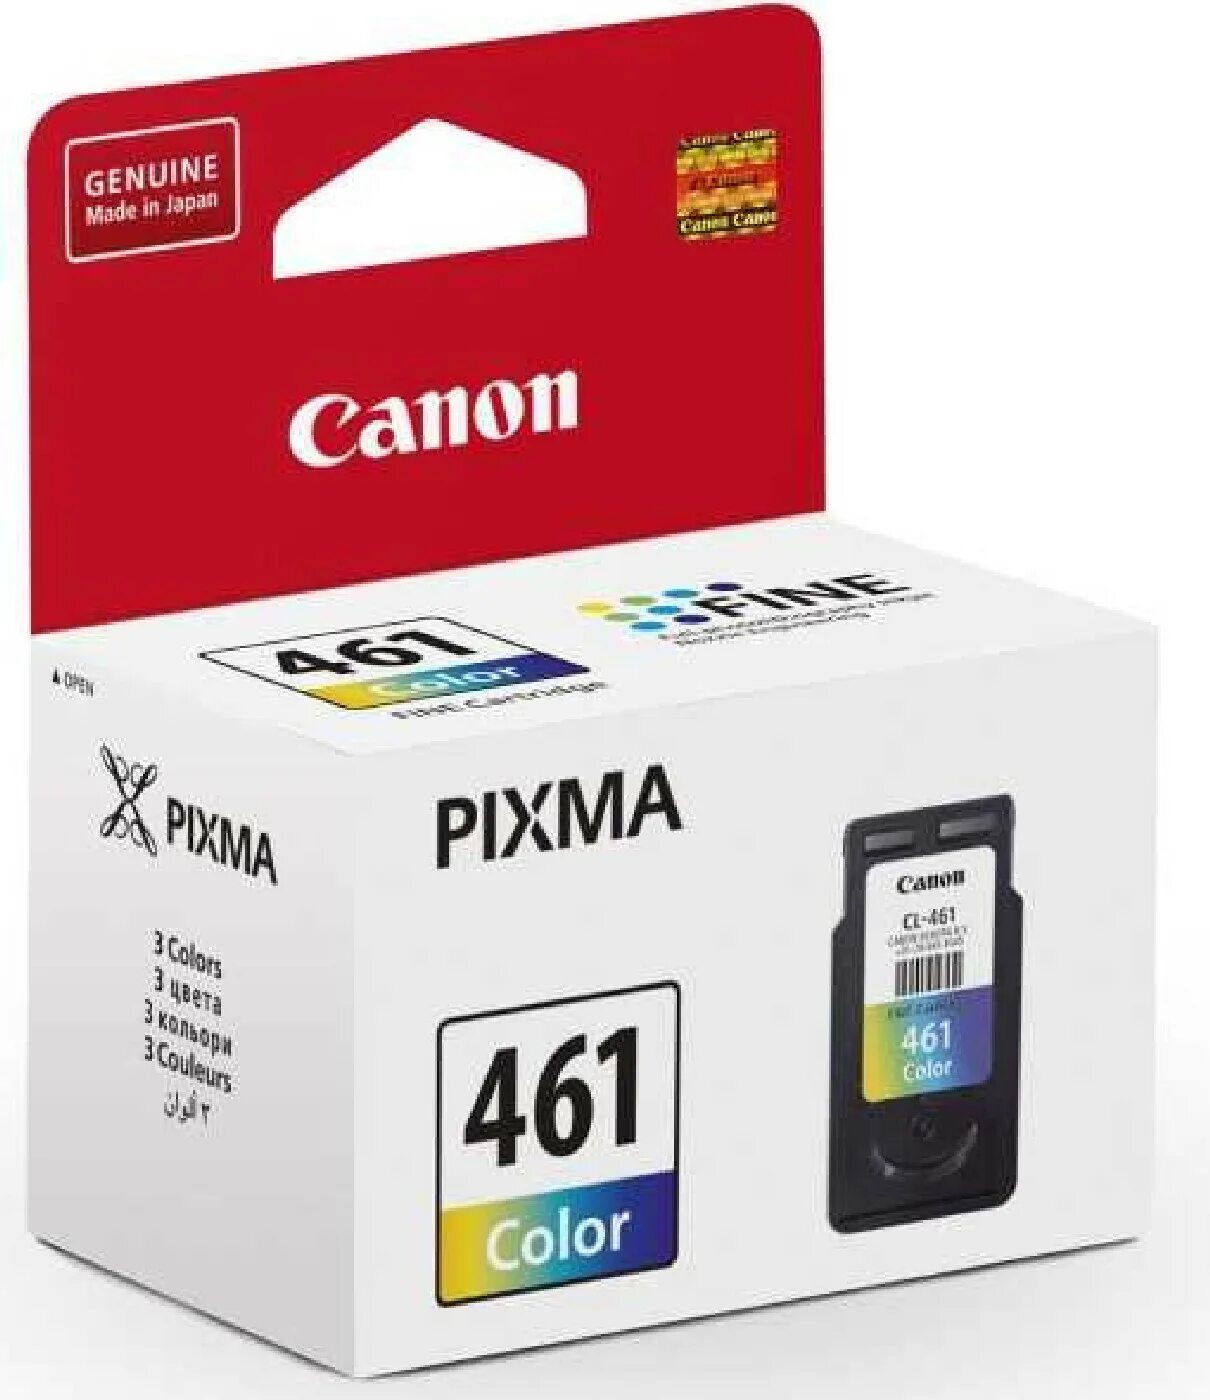 Купить картридж canon cl. Картридж Canon PIXMA CL-461 Color. Canon PG-460xl (3710c001). Картридж для принтера Canon 445 XL. Картридж Canon 3729c001 CL-461.